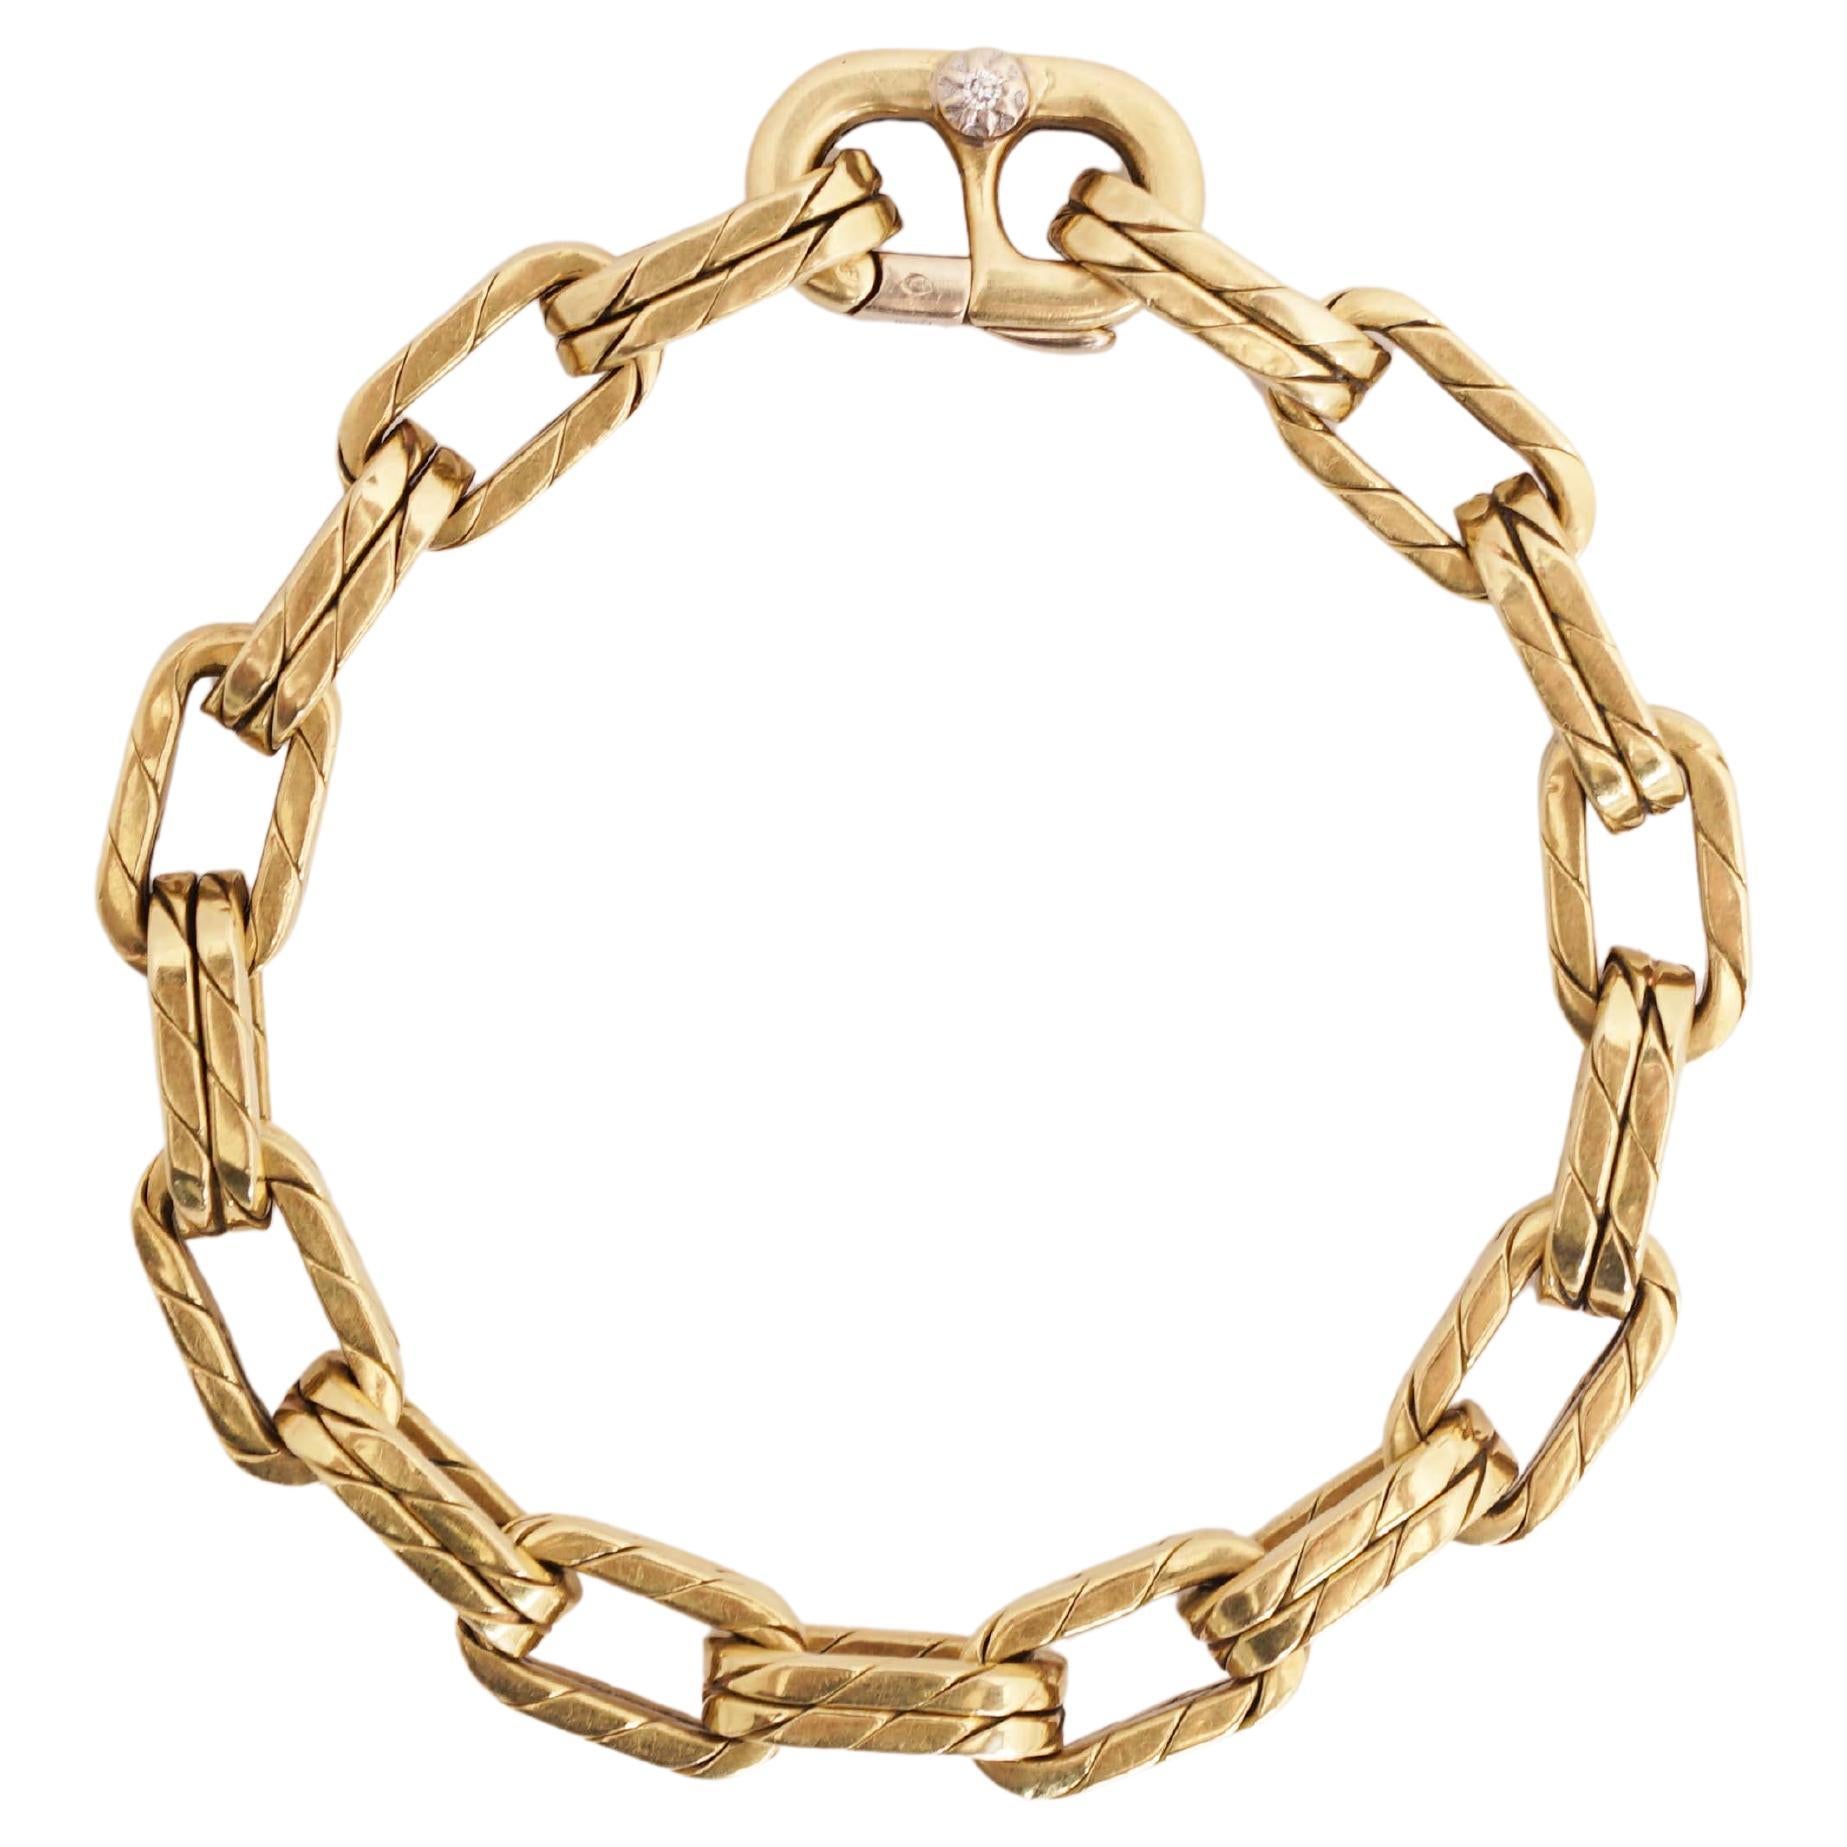 Chimento 18 Karat Yellow Gold and .69 Carat Diamond Cuff Bracelet at ...